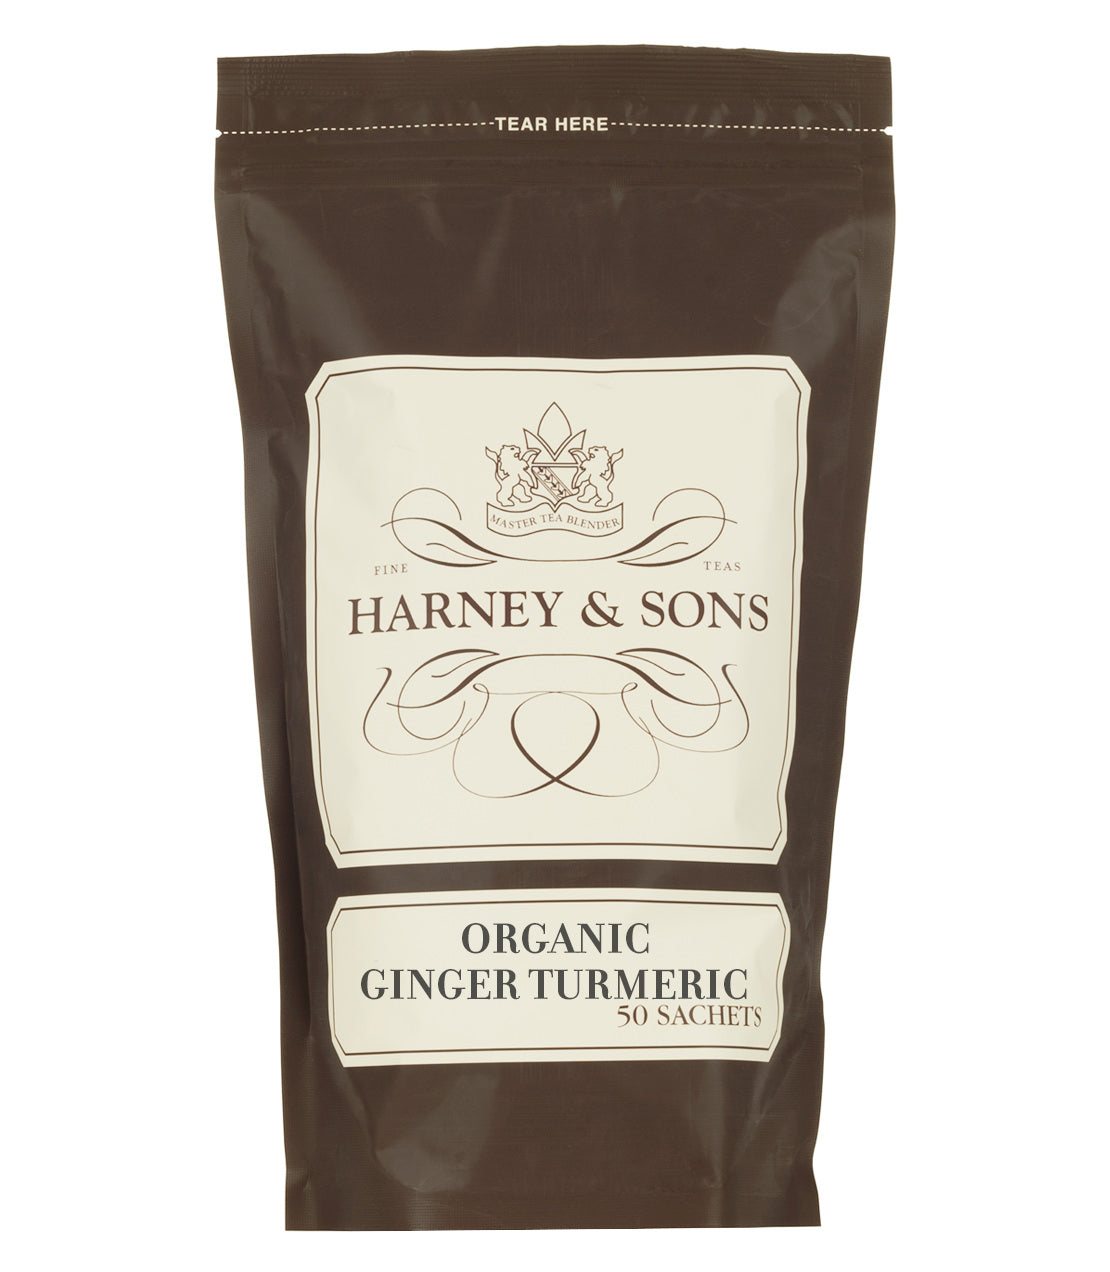 Organic Ginger Turmeric - Sachets Bag of 50 Sachets - Harney & Sons Fine Teas